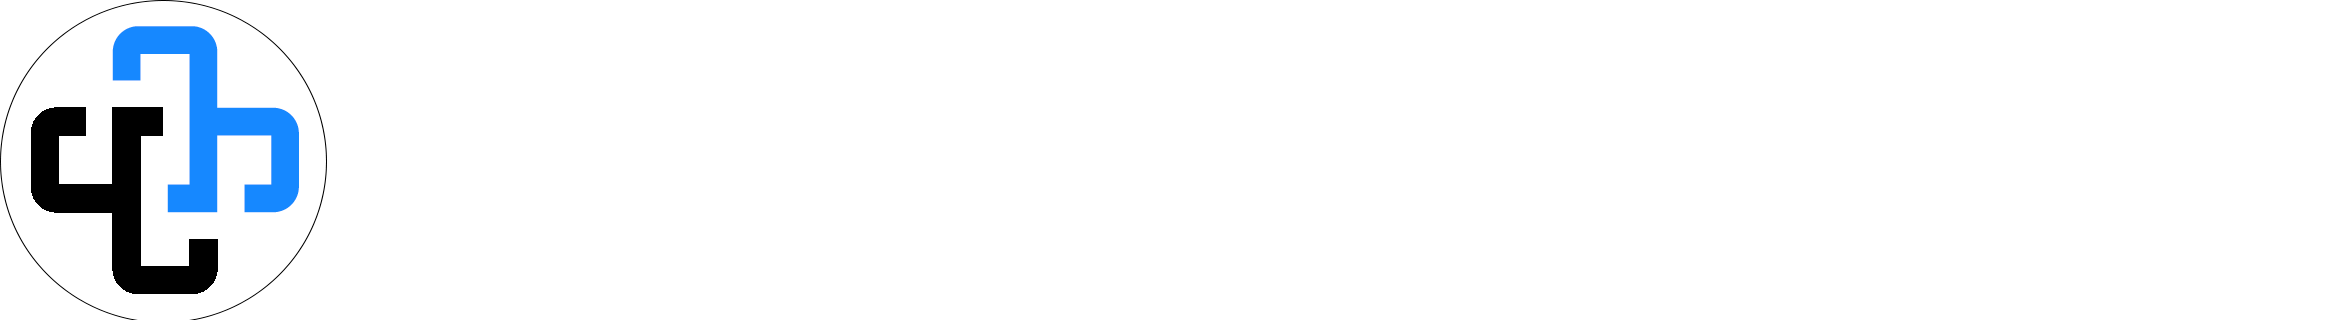 k-logo-1